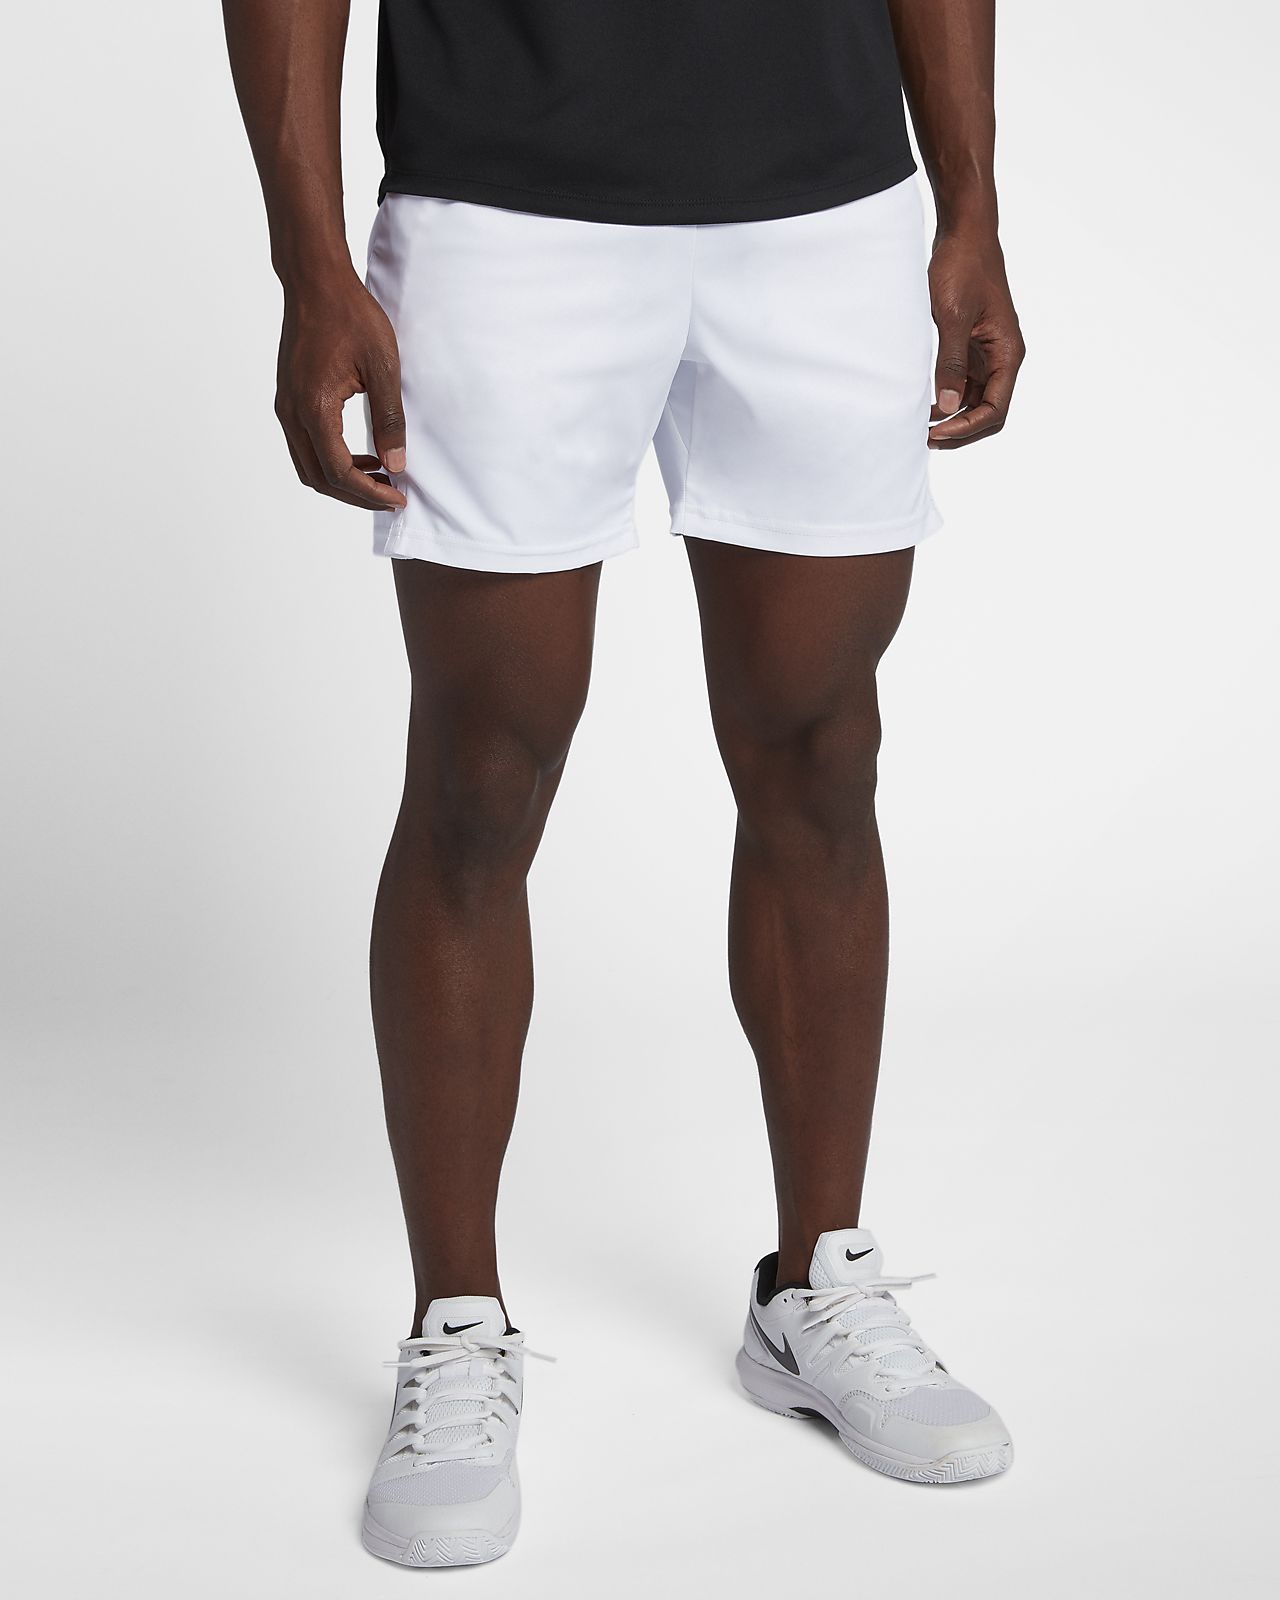 shorts nike tennis